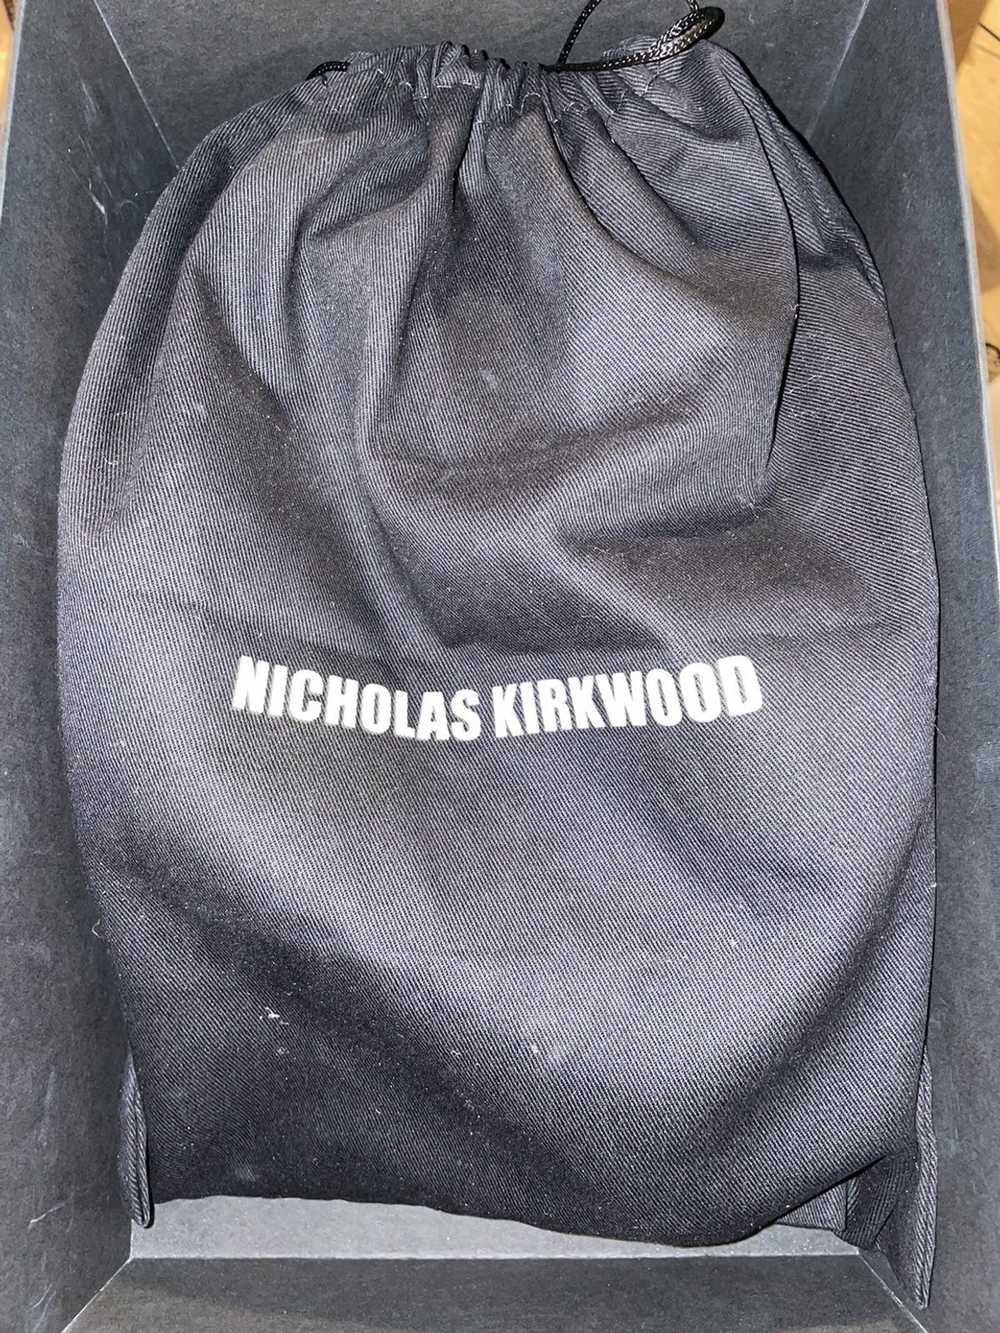 Nicholas Kirkwood Crystal Heels - image 9